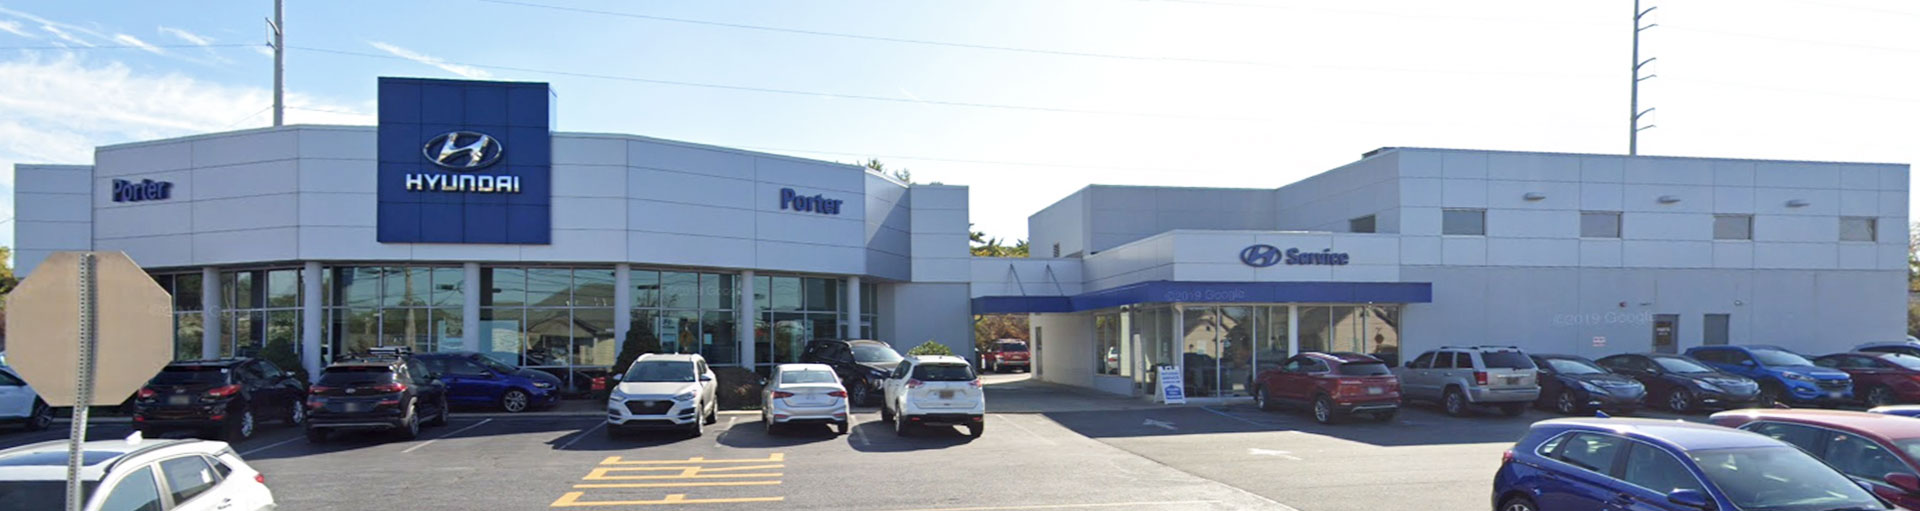 Porter Hyundai Wilmington, DE Service & Repair